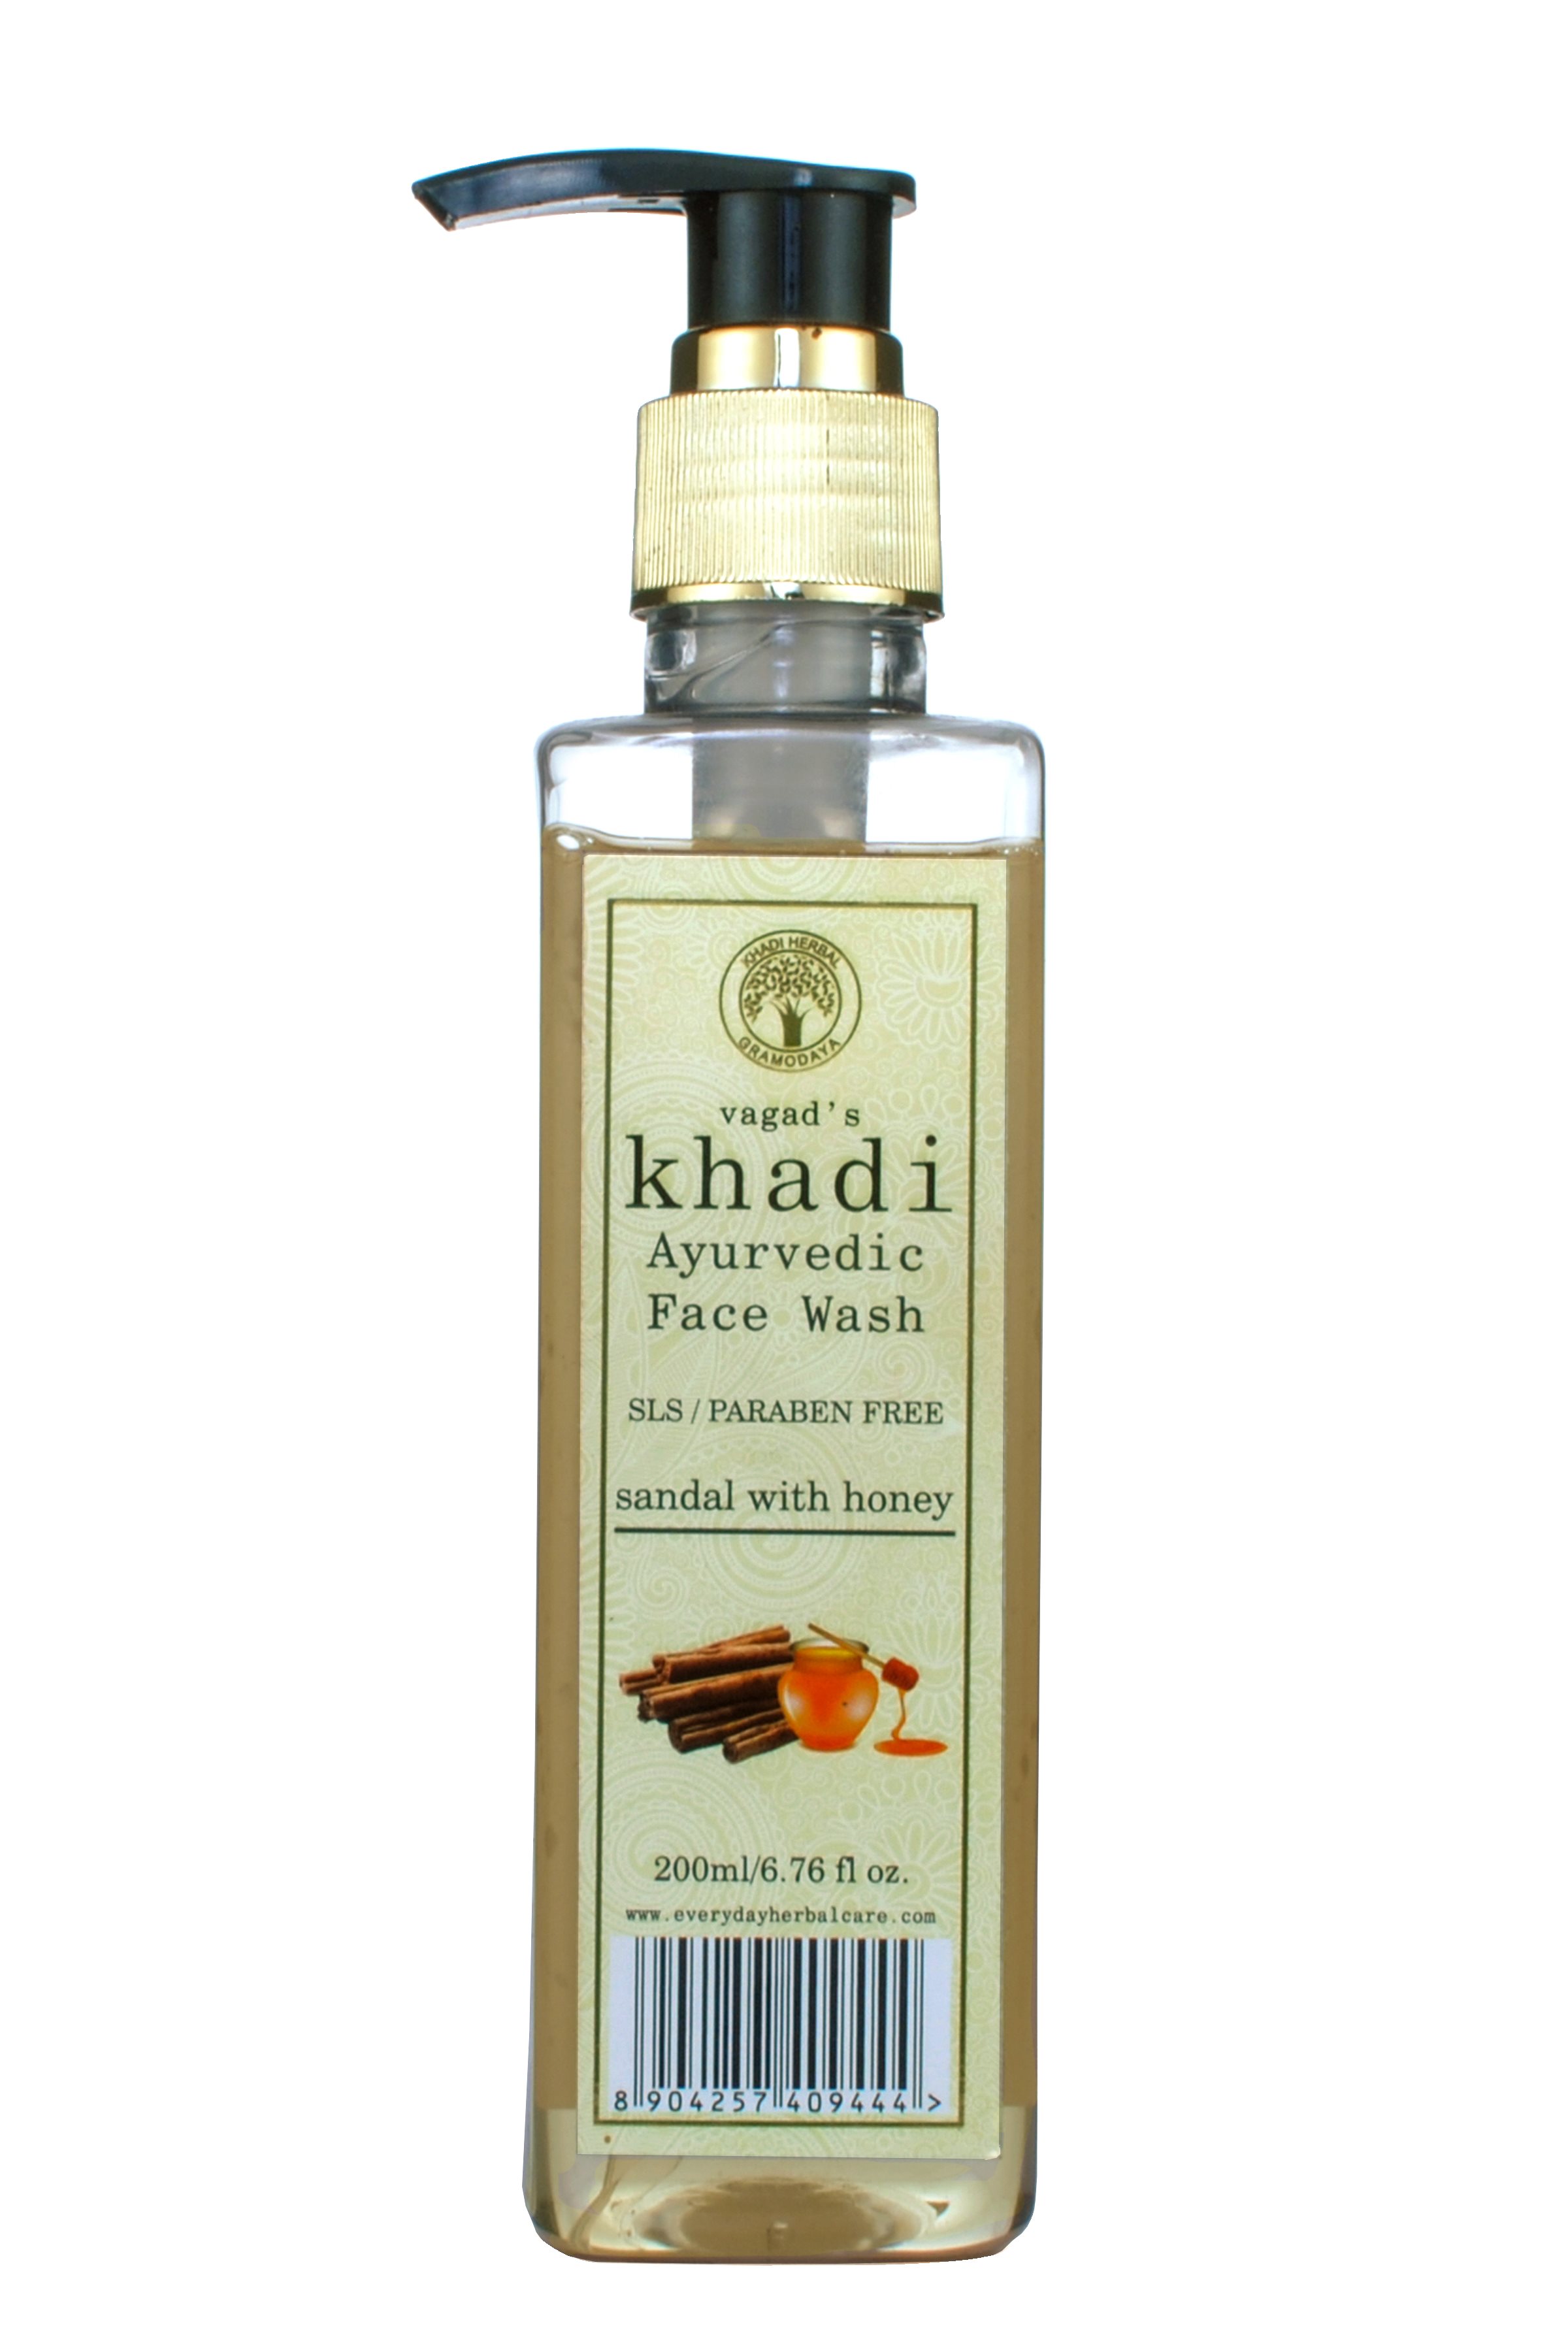 Vagad's Khadi S.L.S And Paraben Free Sandal With Honey Face Wash